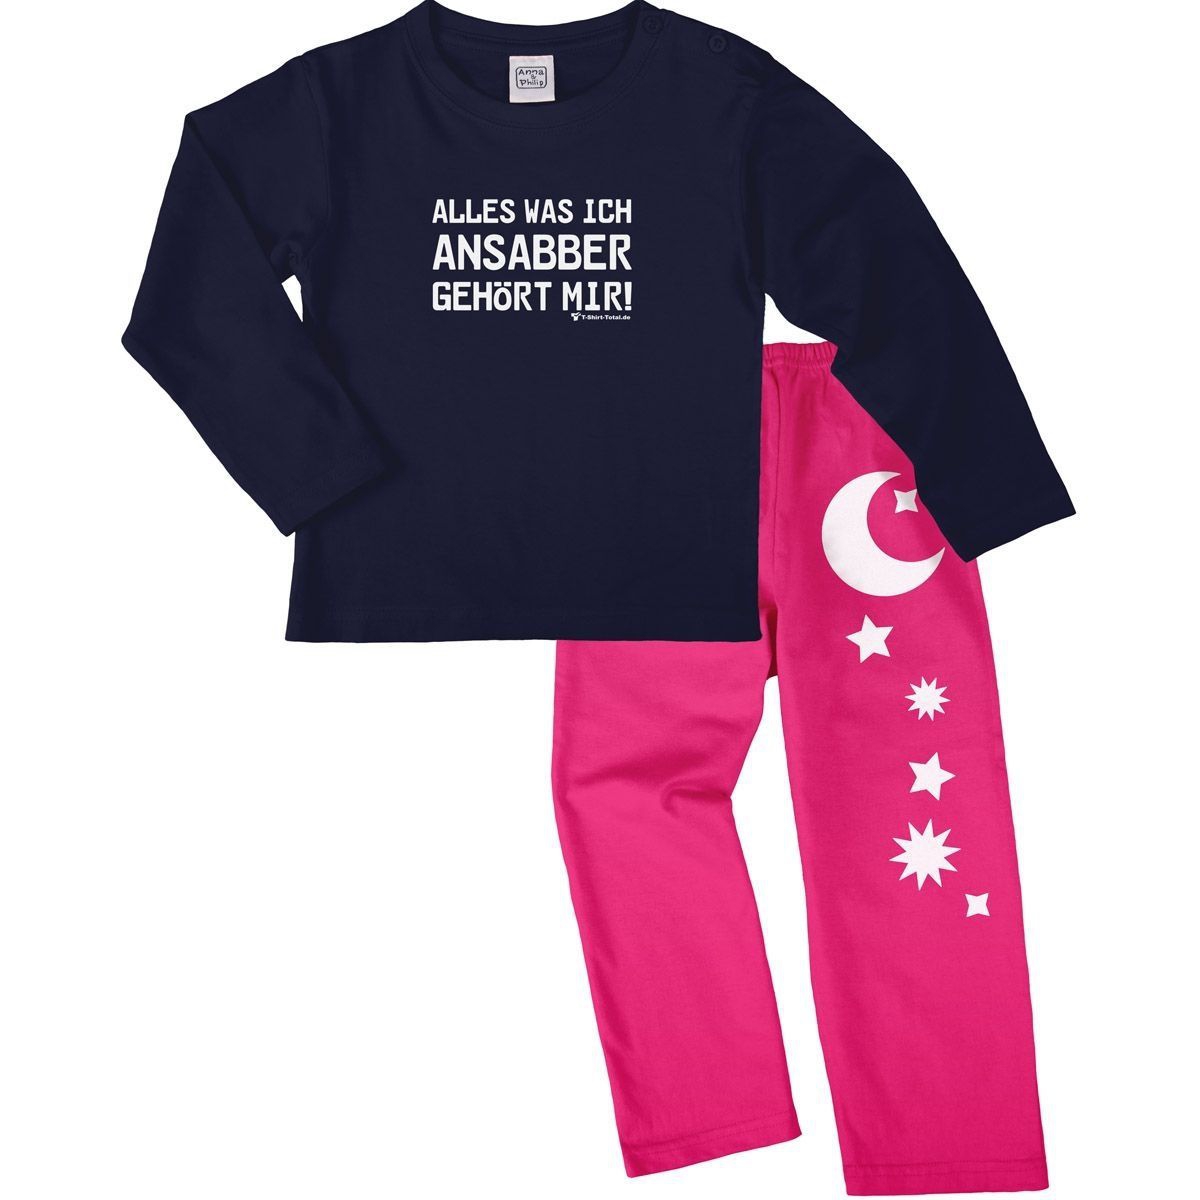 Ansabbern Pyjama Set navy / pink 68 / 74